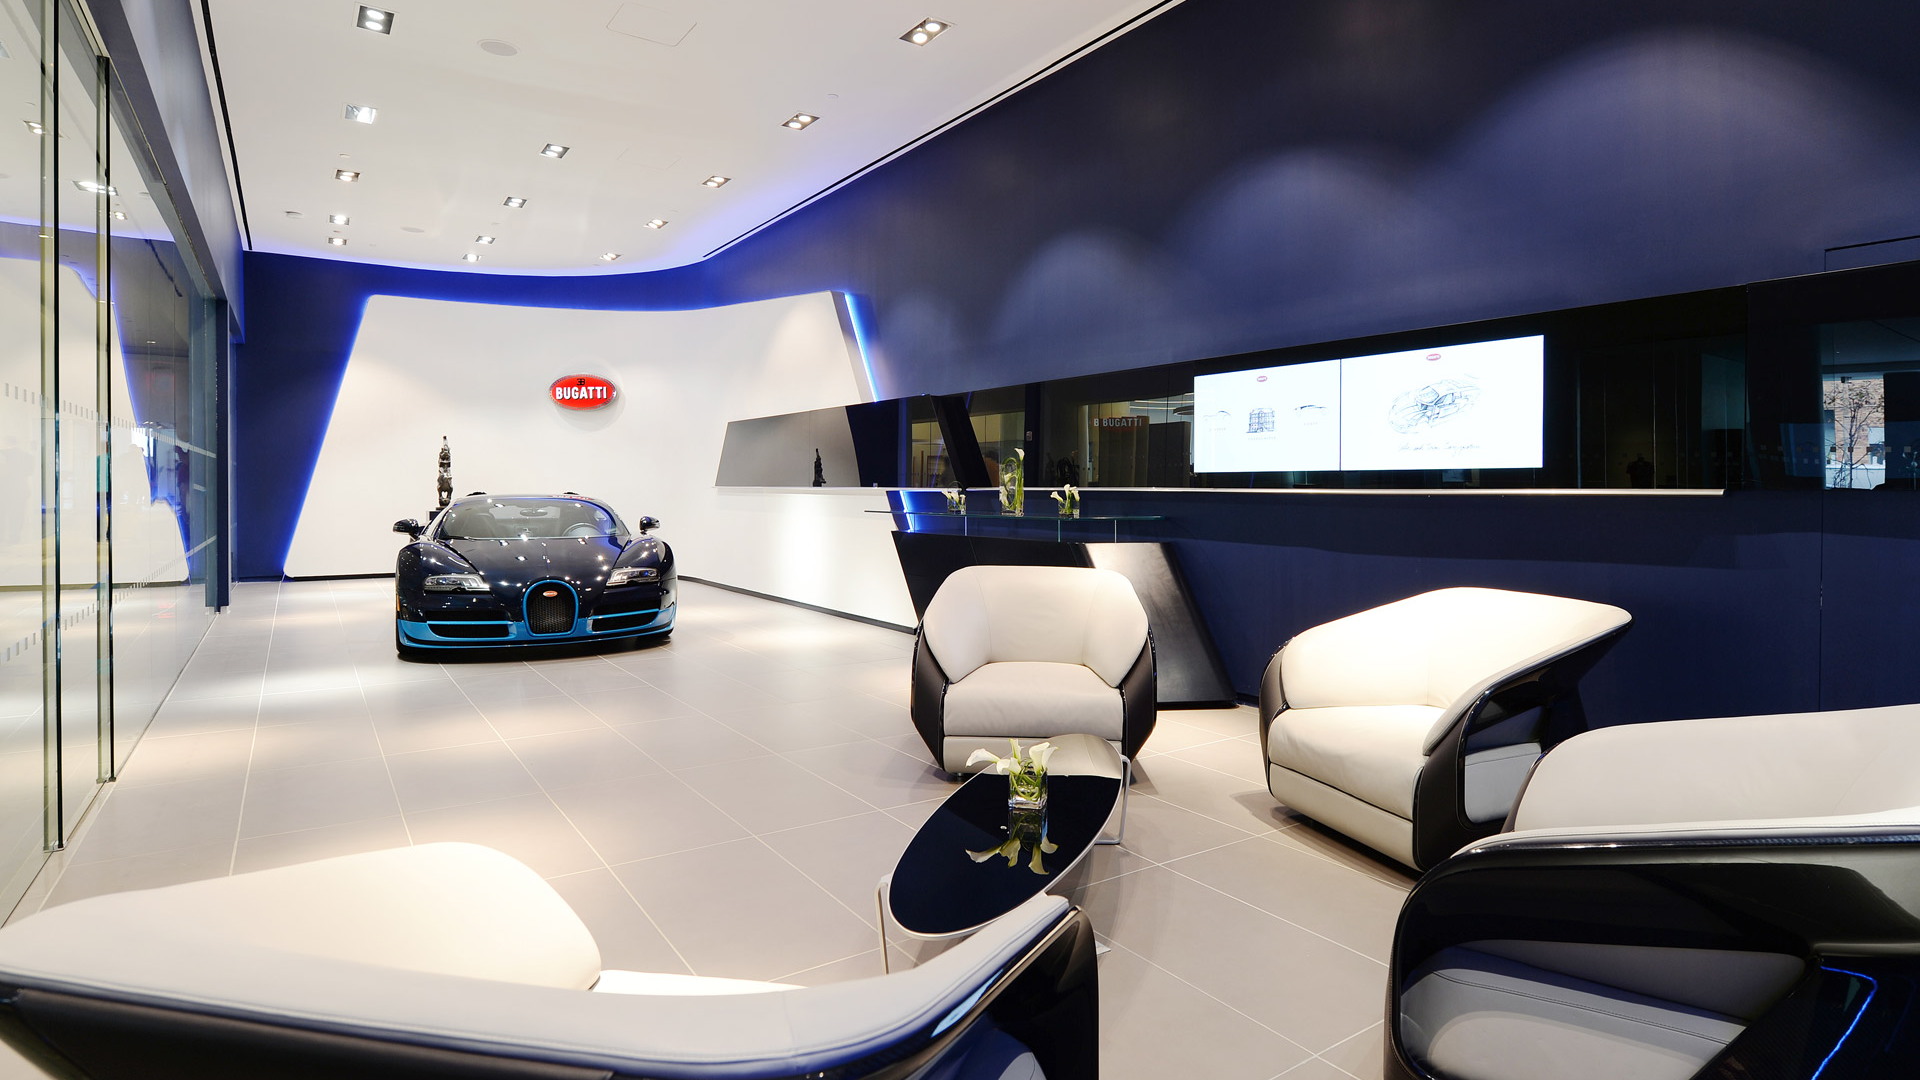 Bugatti showroom in New York City